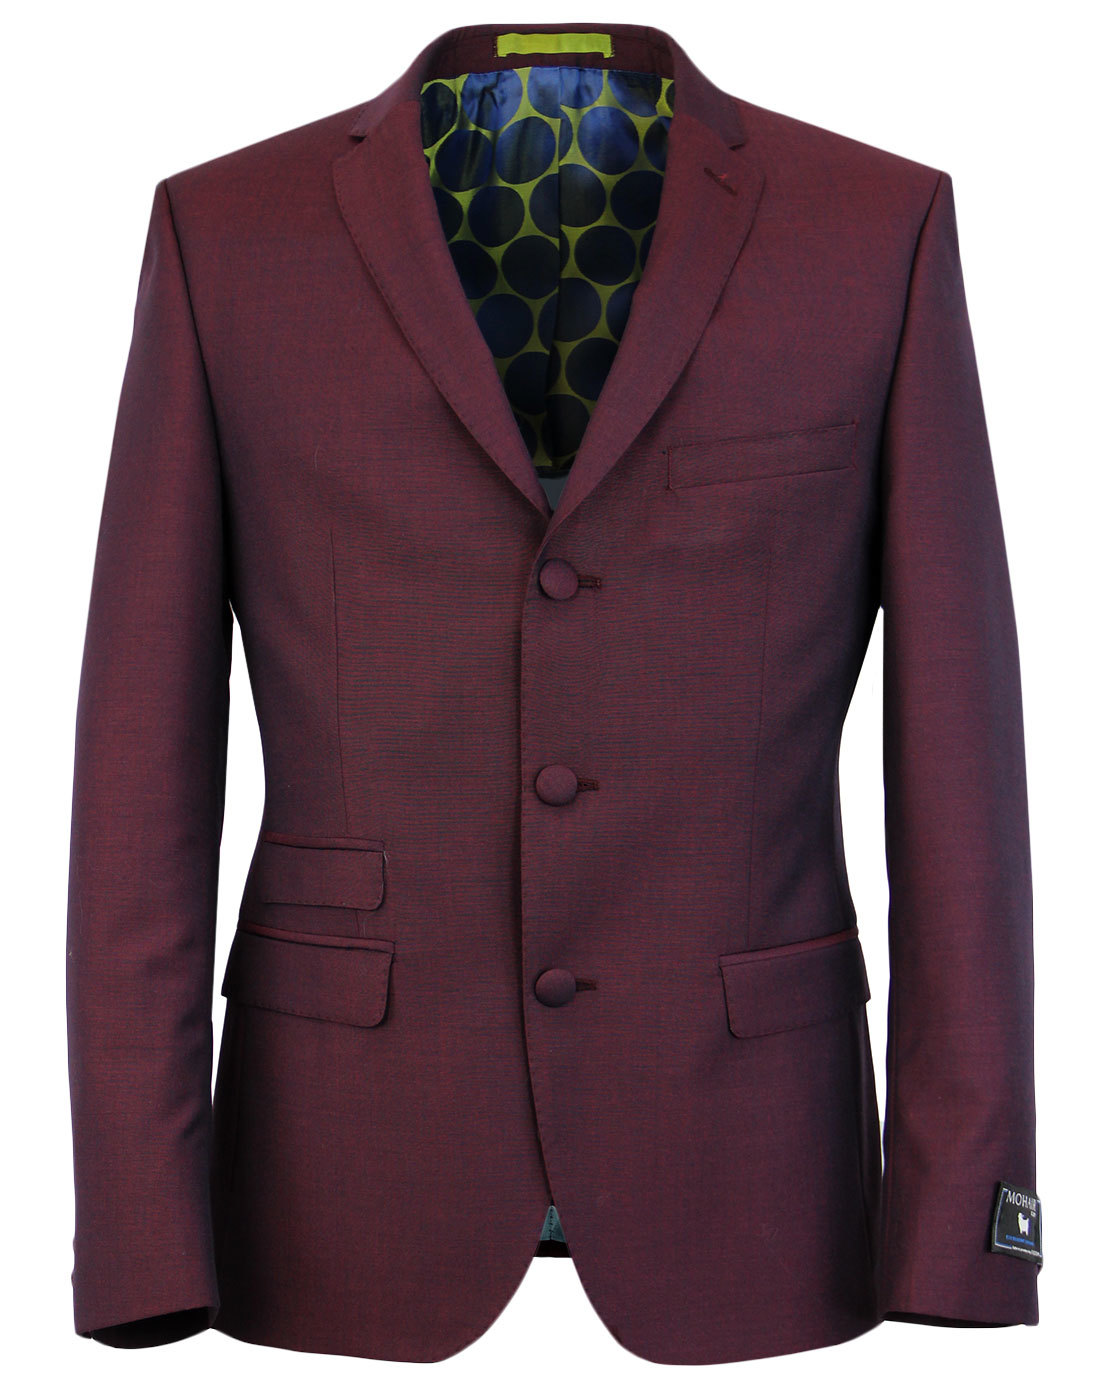 madcap england 60s mod mohair suit jacket burgundy